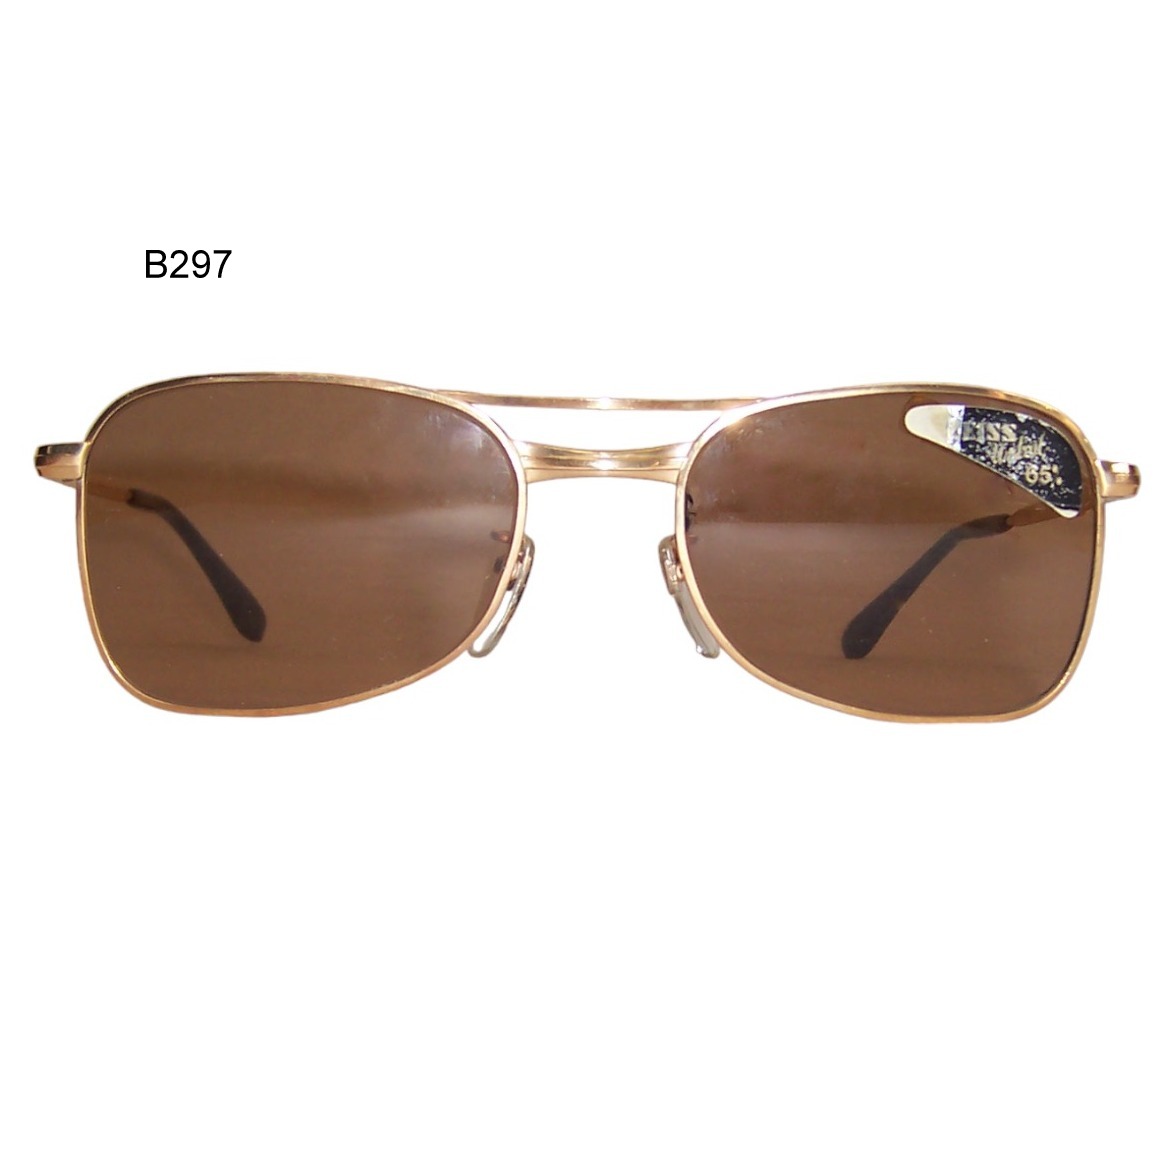 Original 1970s Zeiss sunglasses with original glass lenses – Made in ...